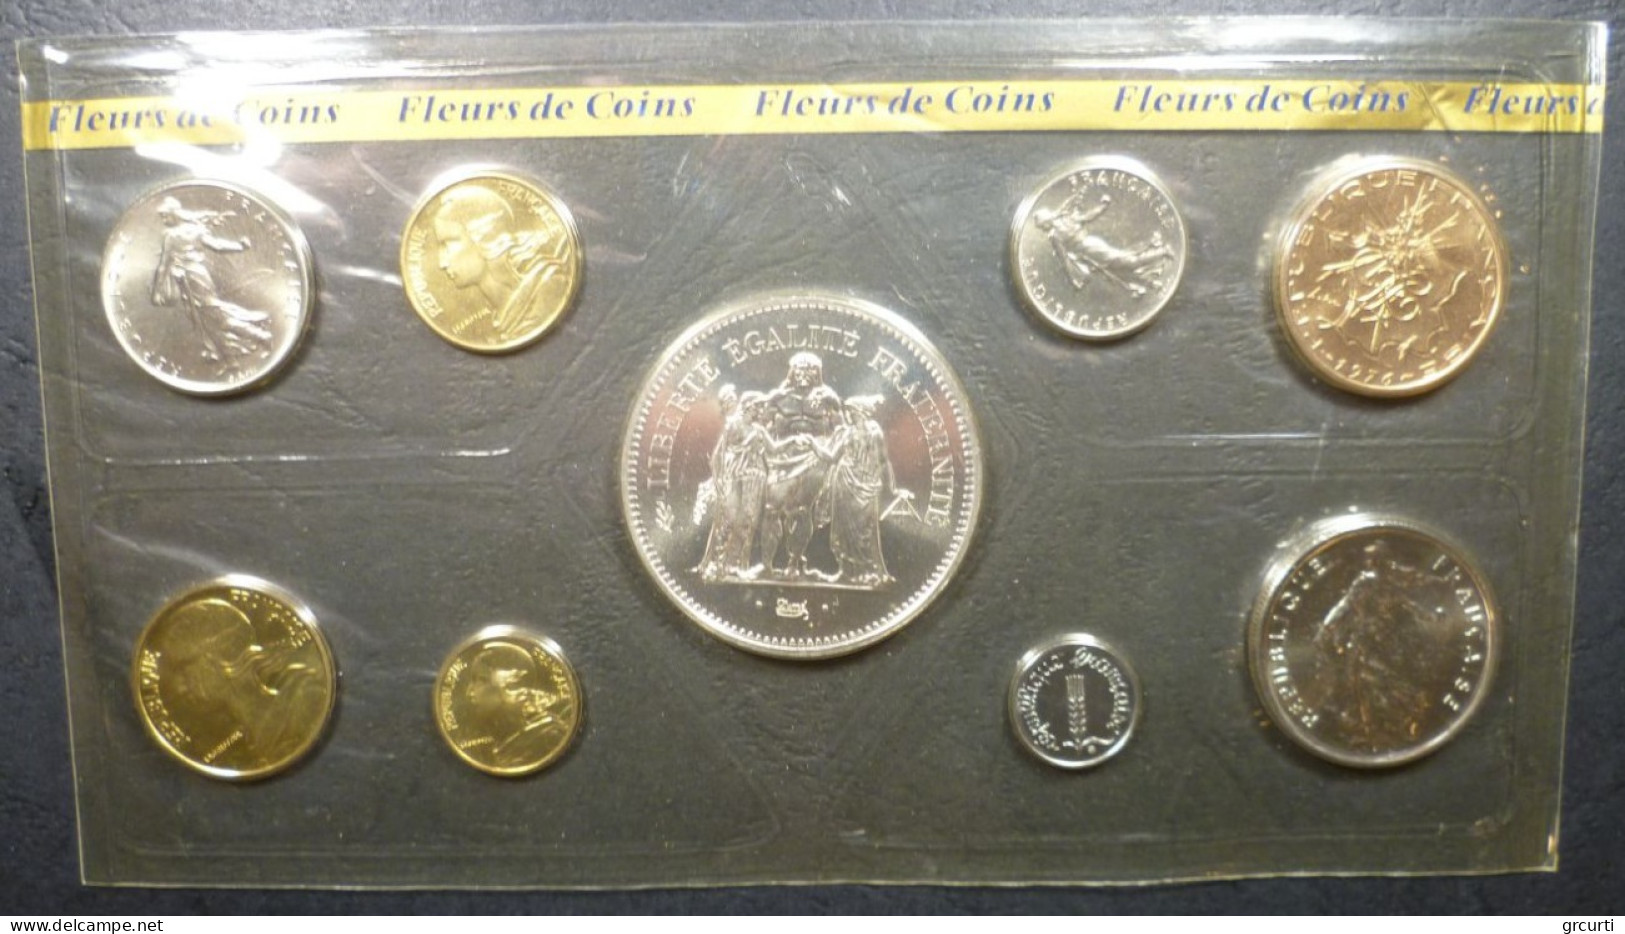 Francia - Set Fleurs De Coins 1976 - KM# SS13 - BU, BE, Astucci E Ripiani